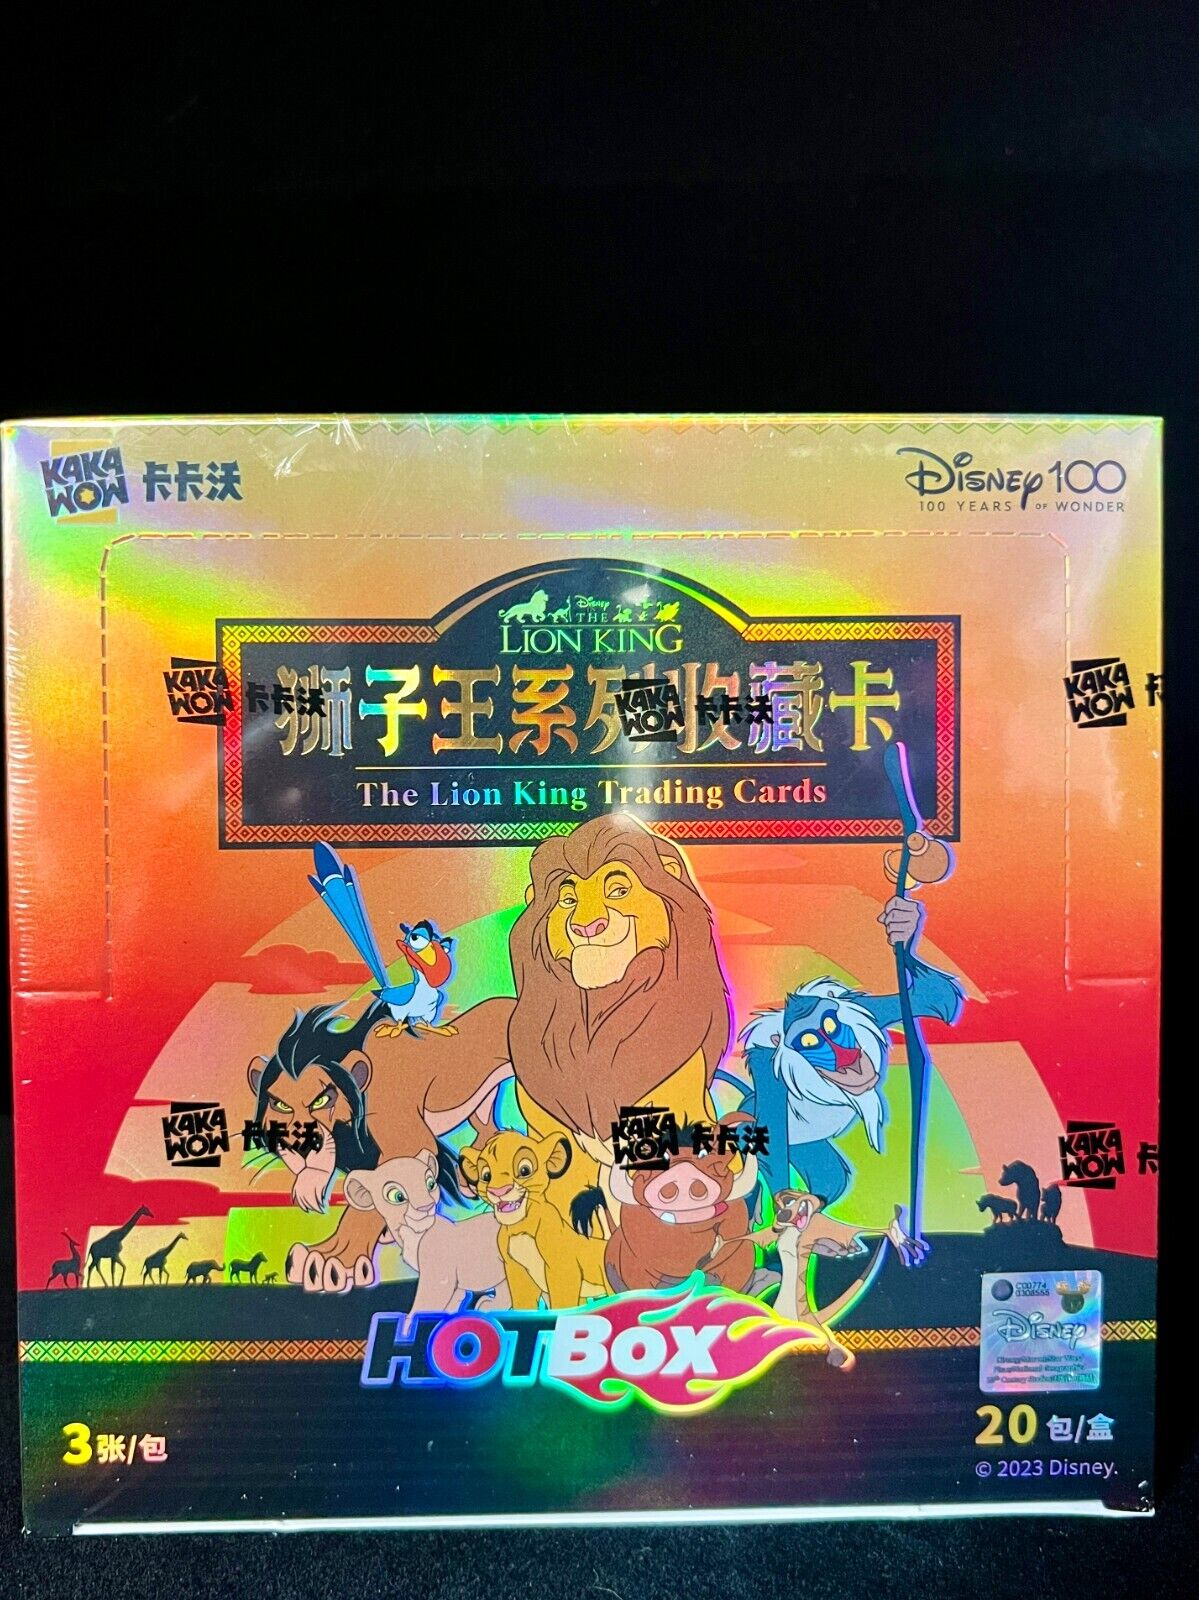 Disney 100th 2023 kakawow the lion King tranding cards hot box sealed box new